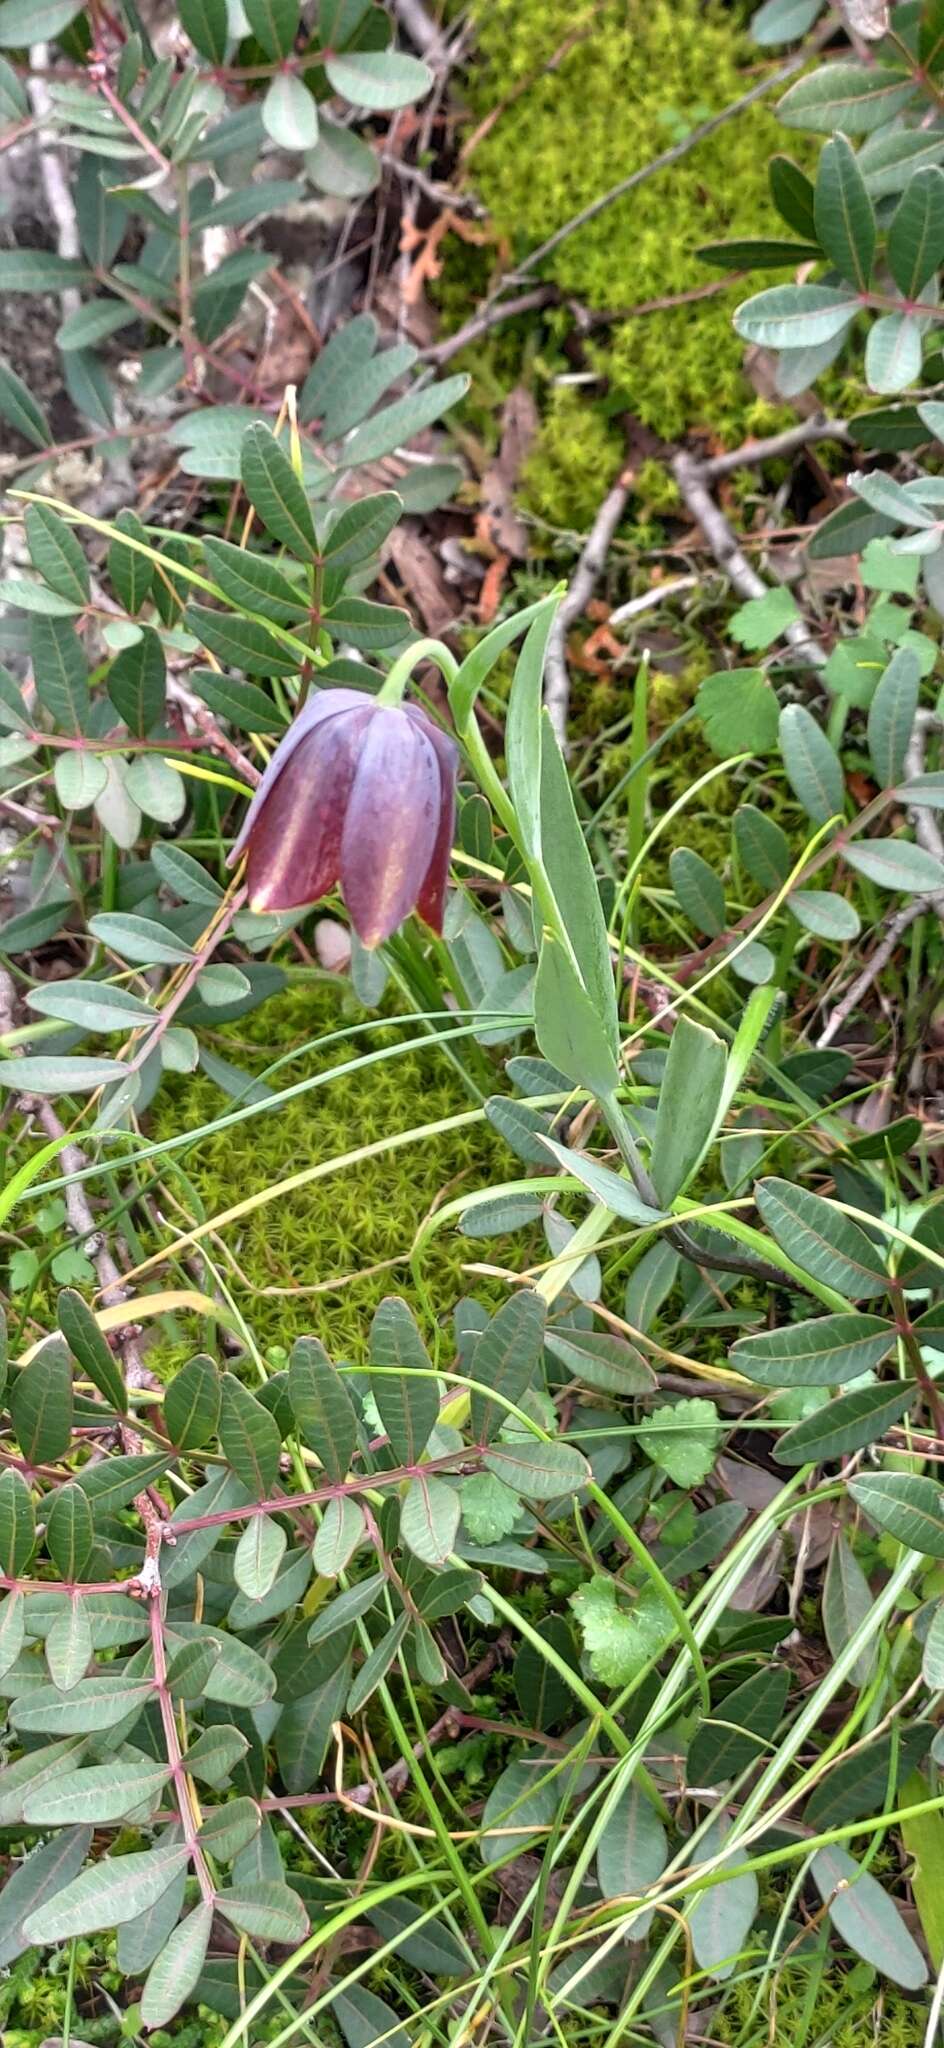 Image of Fritillaria graeca Boiss. & Spruner